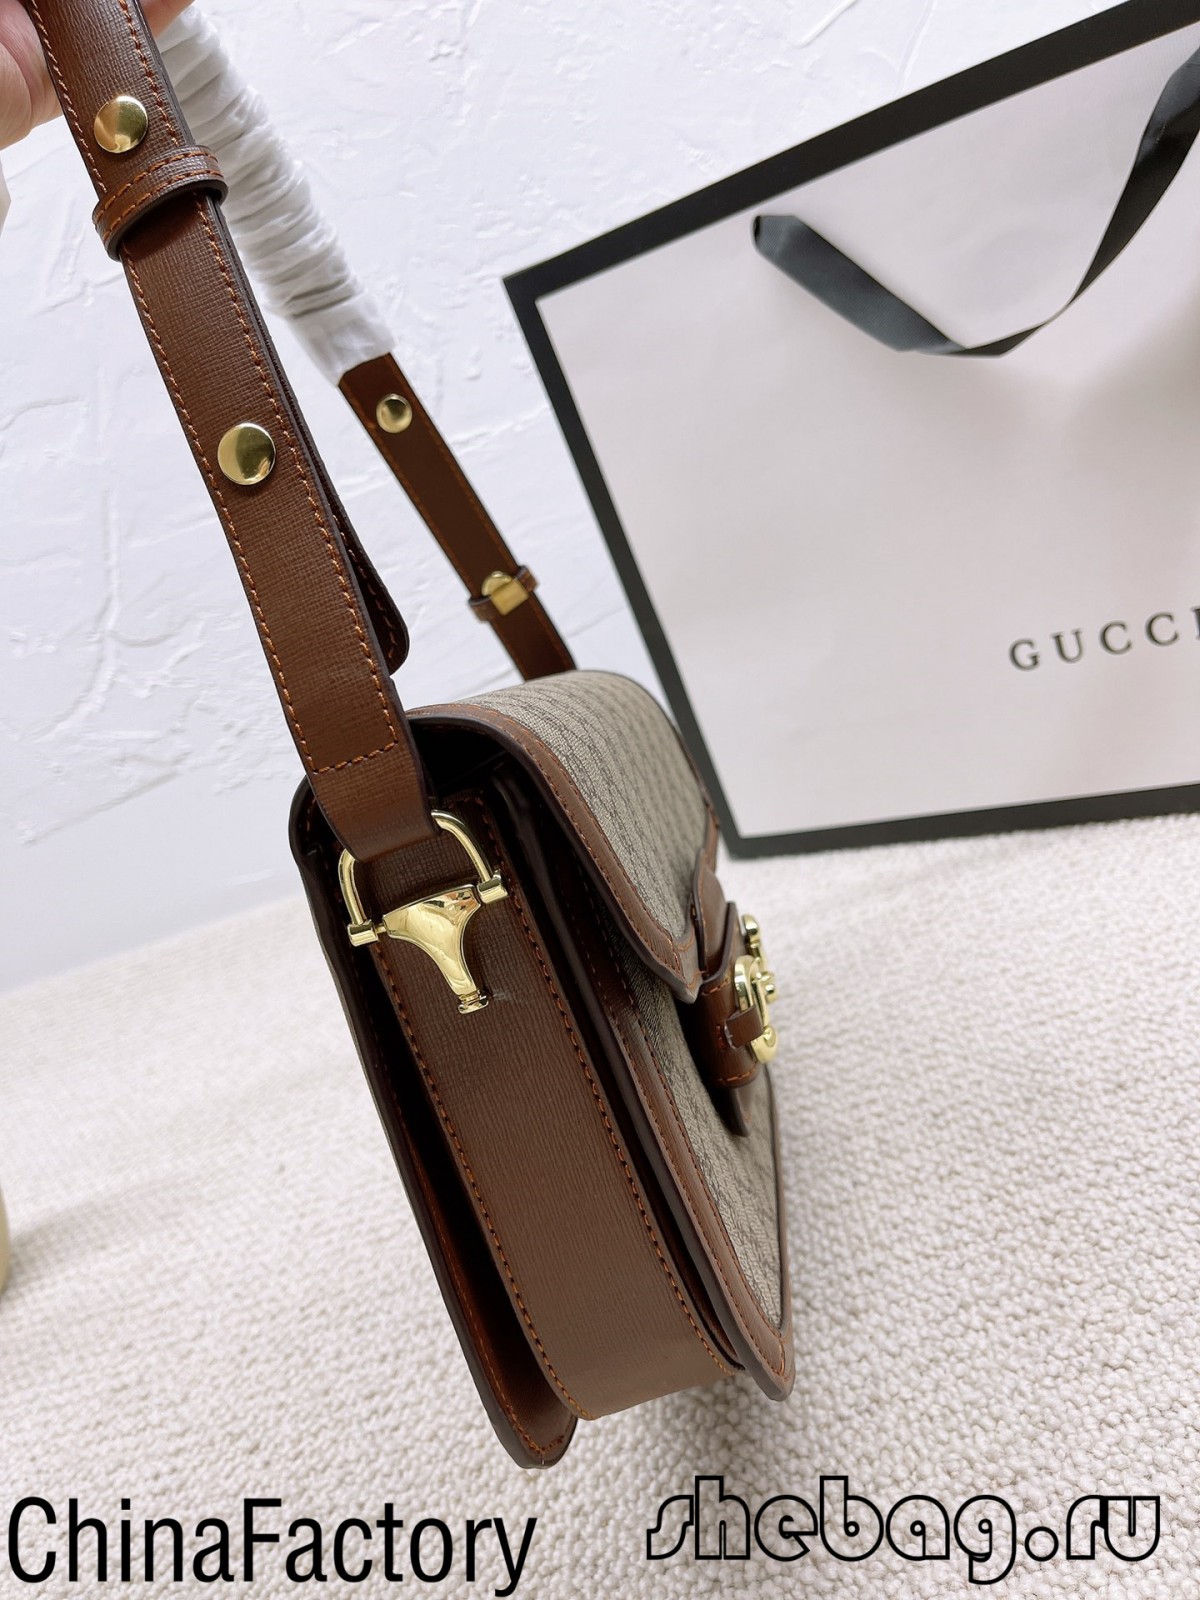 Реплика сумки Gucci Horse bit hobo: Gucci 1955 (2022 Hottest) - Интернет-магазин подделок лучшего качества сумки Louis Vuitton, Реплика дизайнерской сумки ru